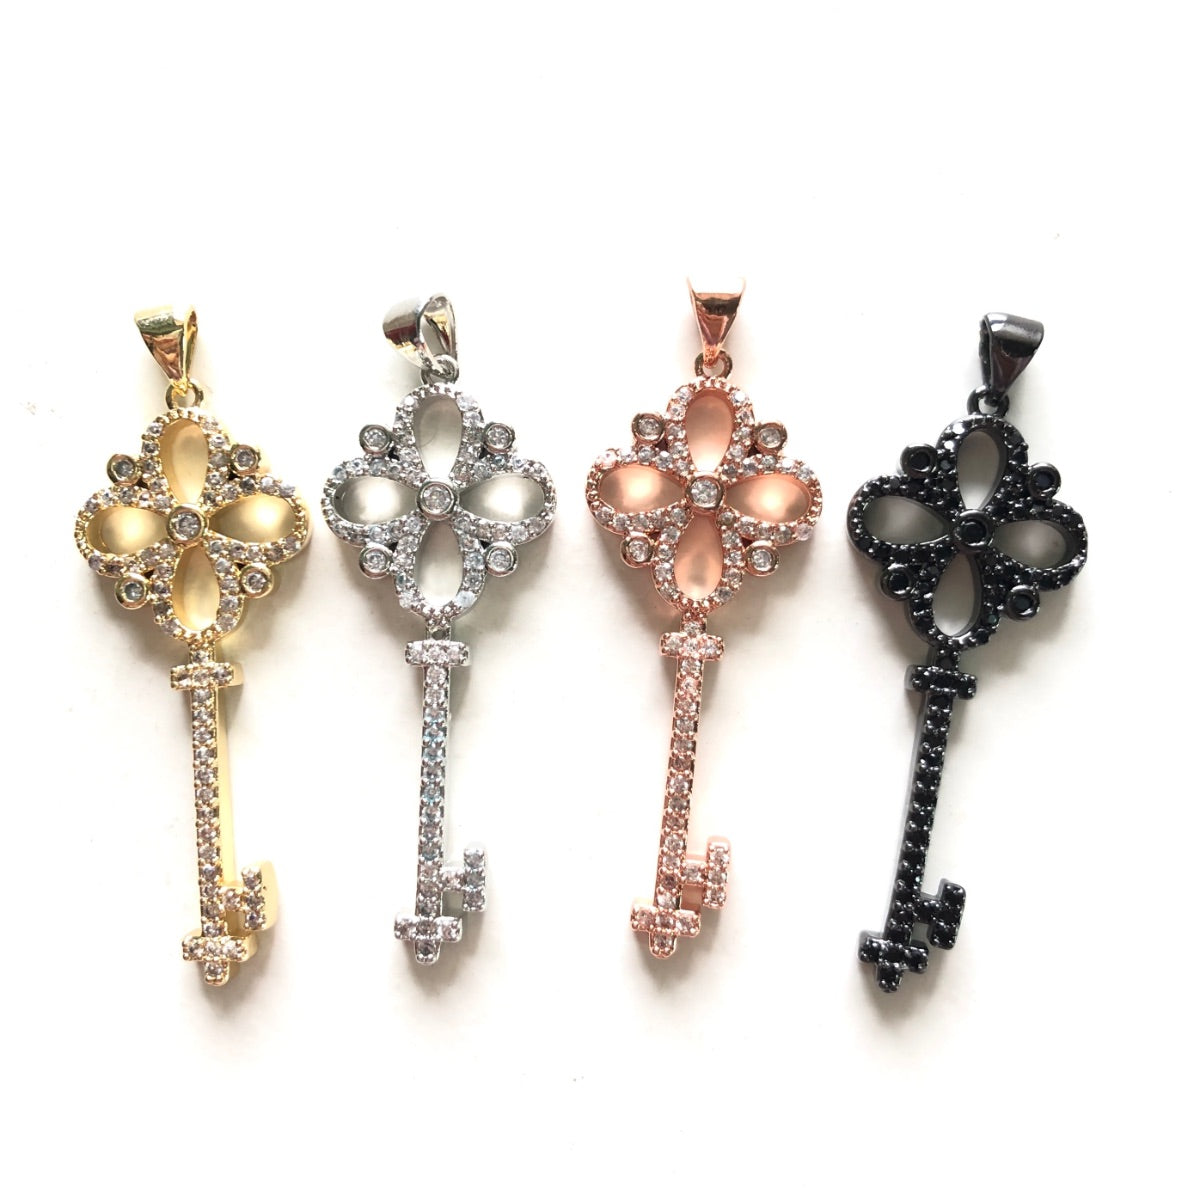 10pcs/lot 42*16mm CZ Paved Key Charms CZ Paved Charms Keys & Locks On Sale Charms Beads Beyond